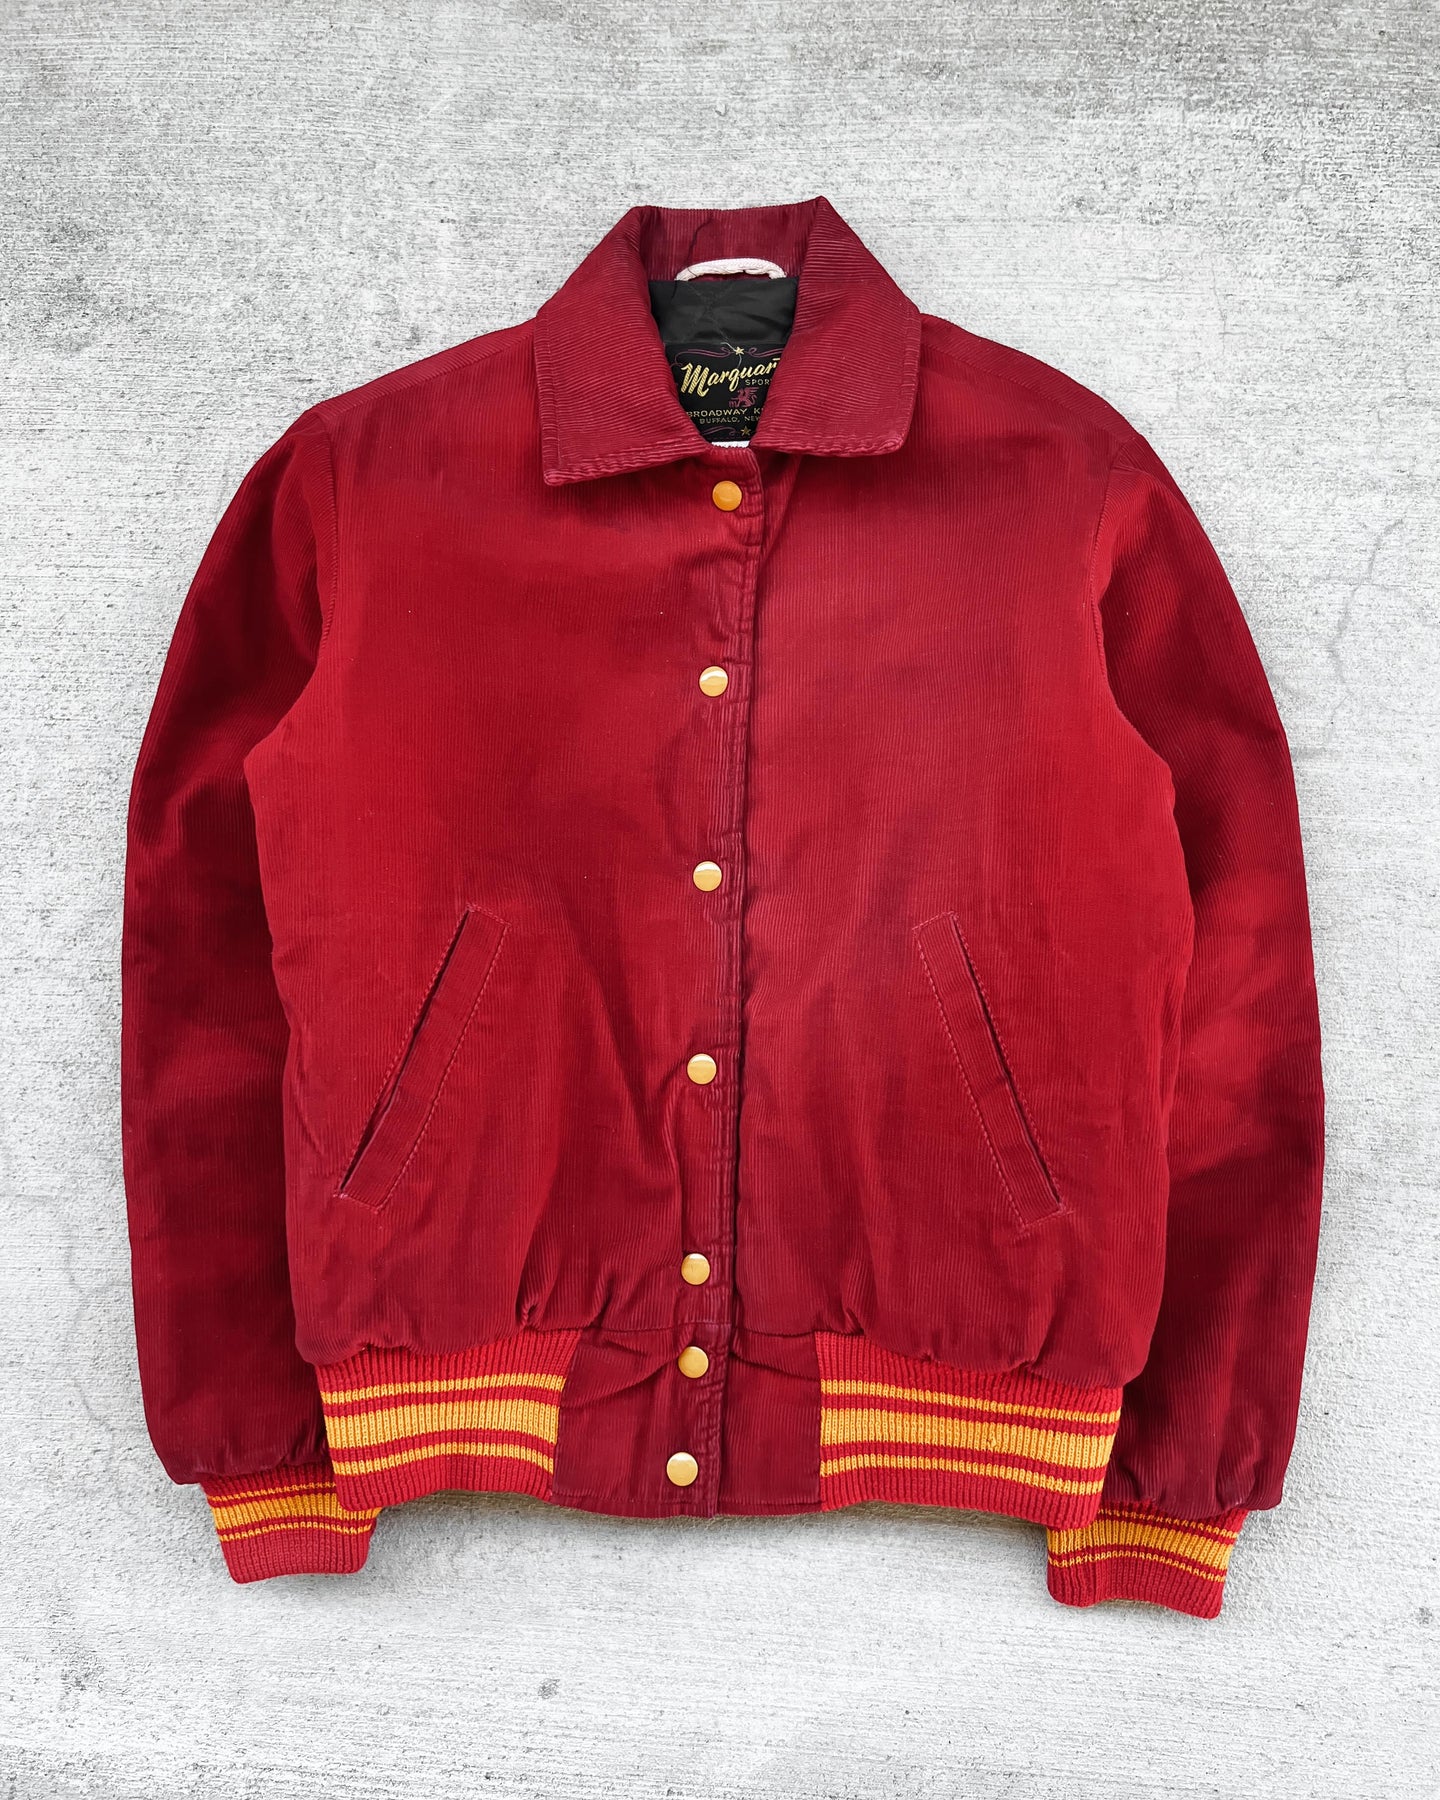 1990s Blank Corduroy Red Varsity Jacket - Size Medium